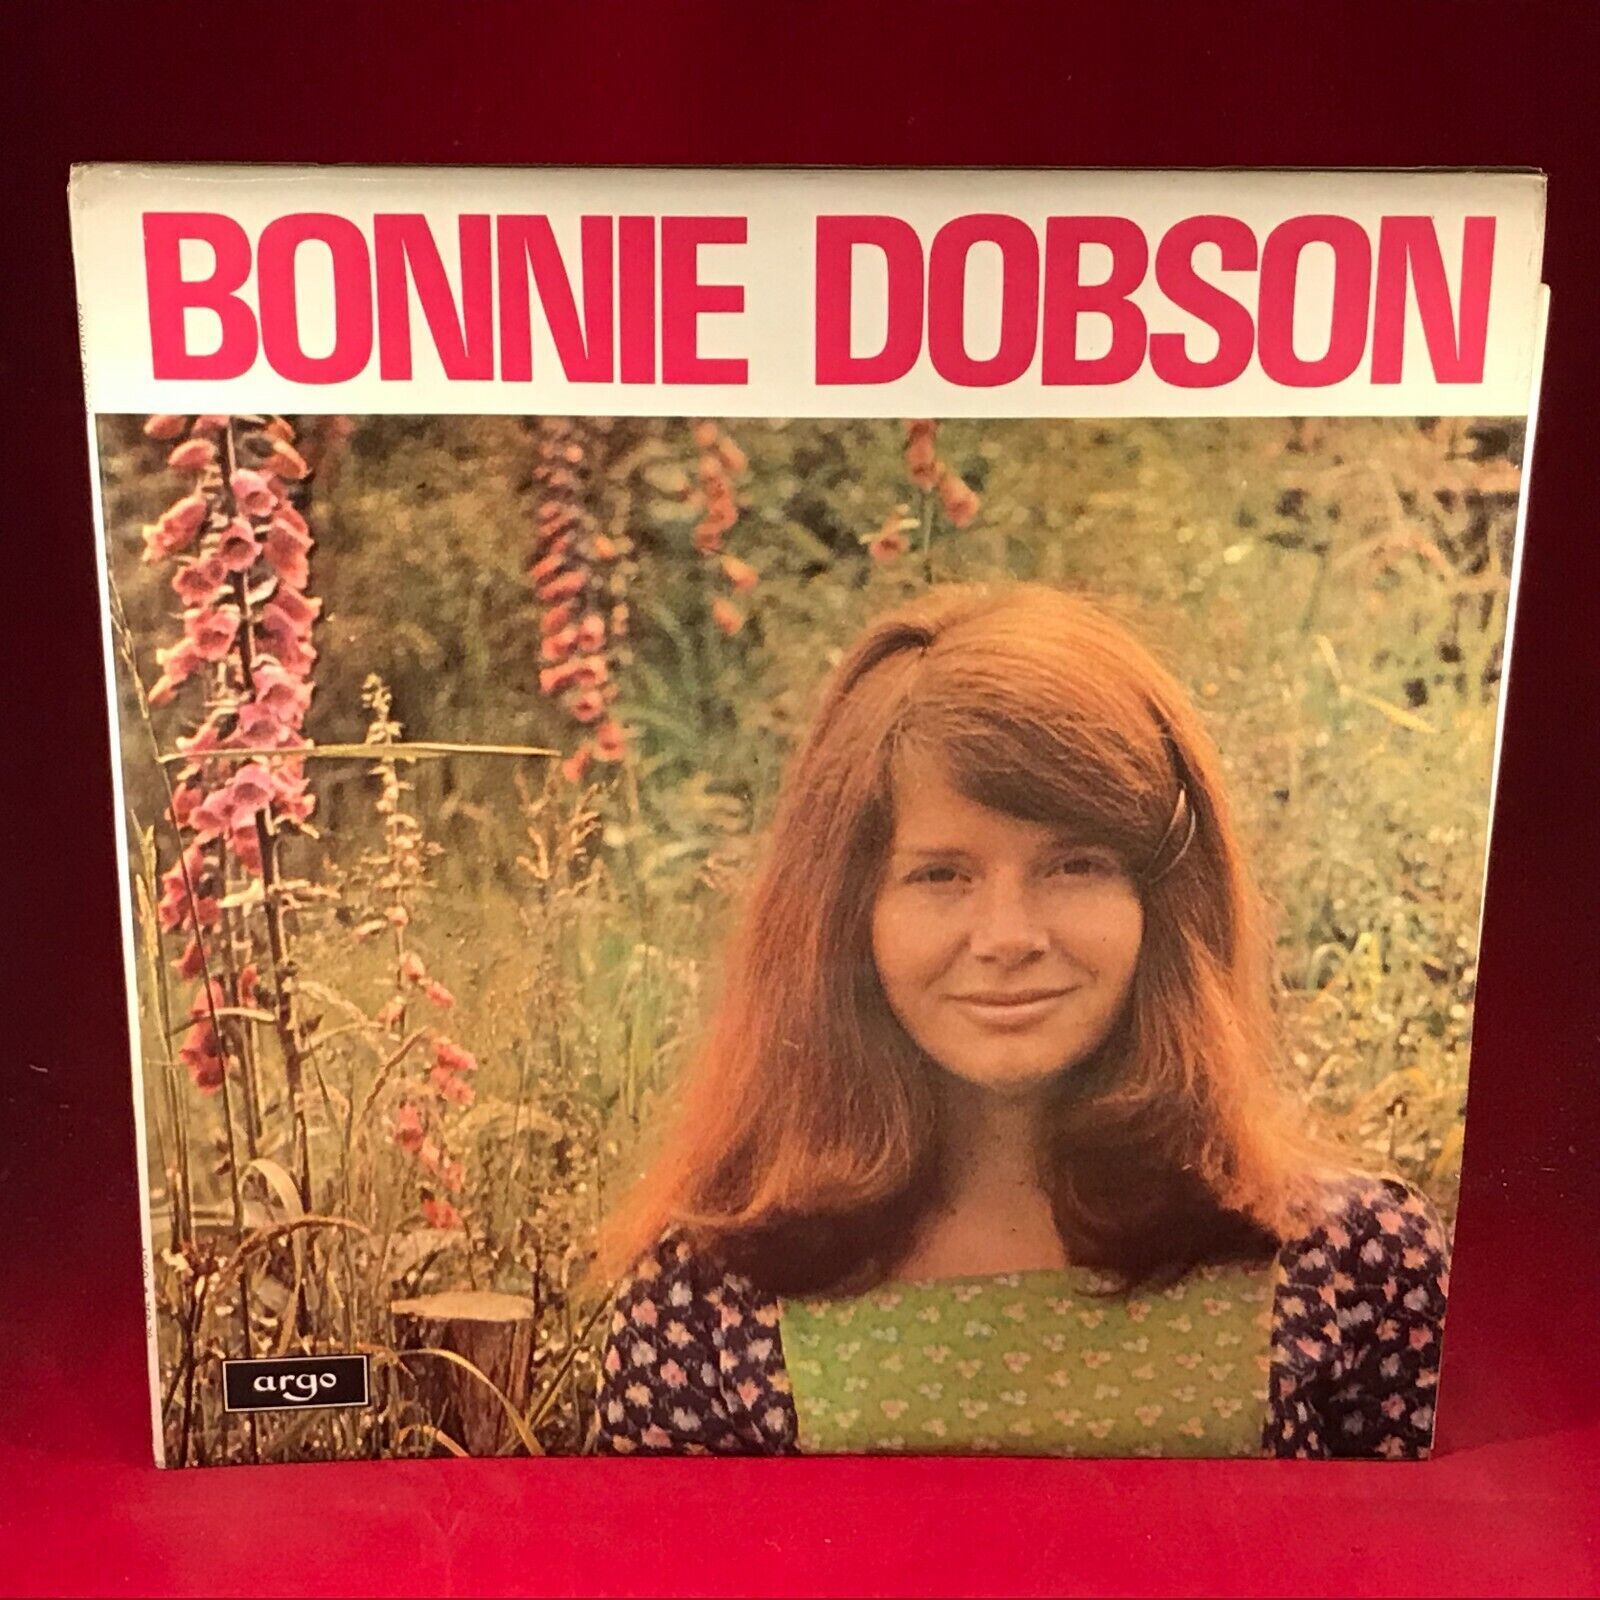 BONNIE DOBSON Bonnie Dobson 1972 UK Vinyl LP Argo ZFB 79 same self titled